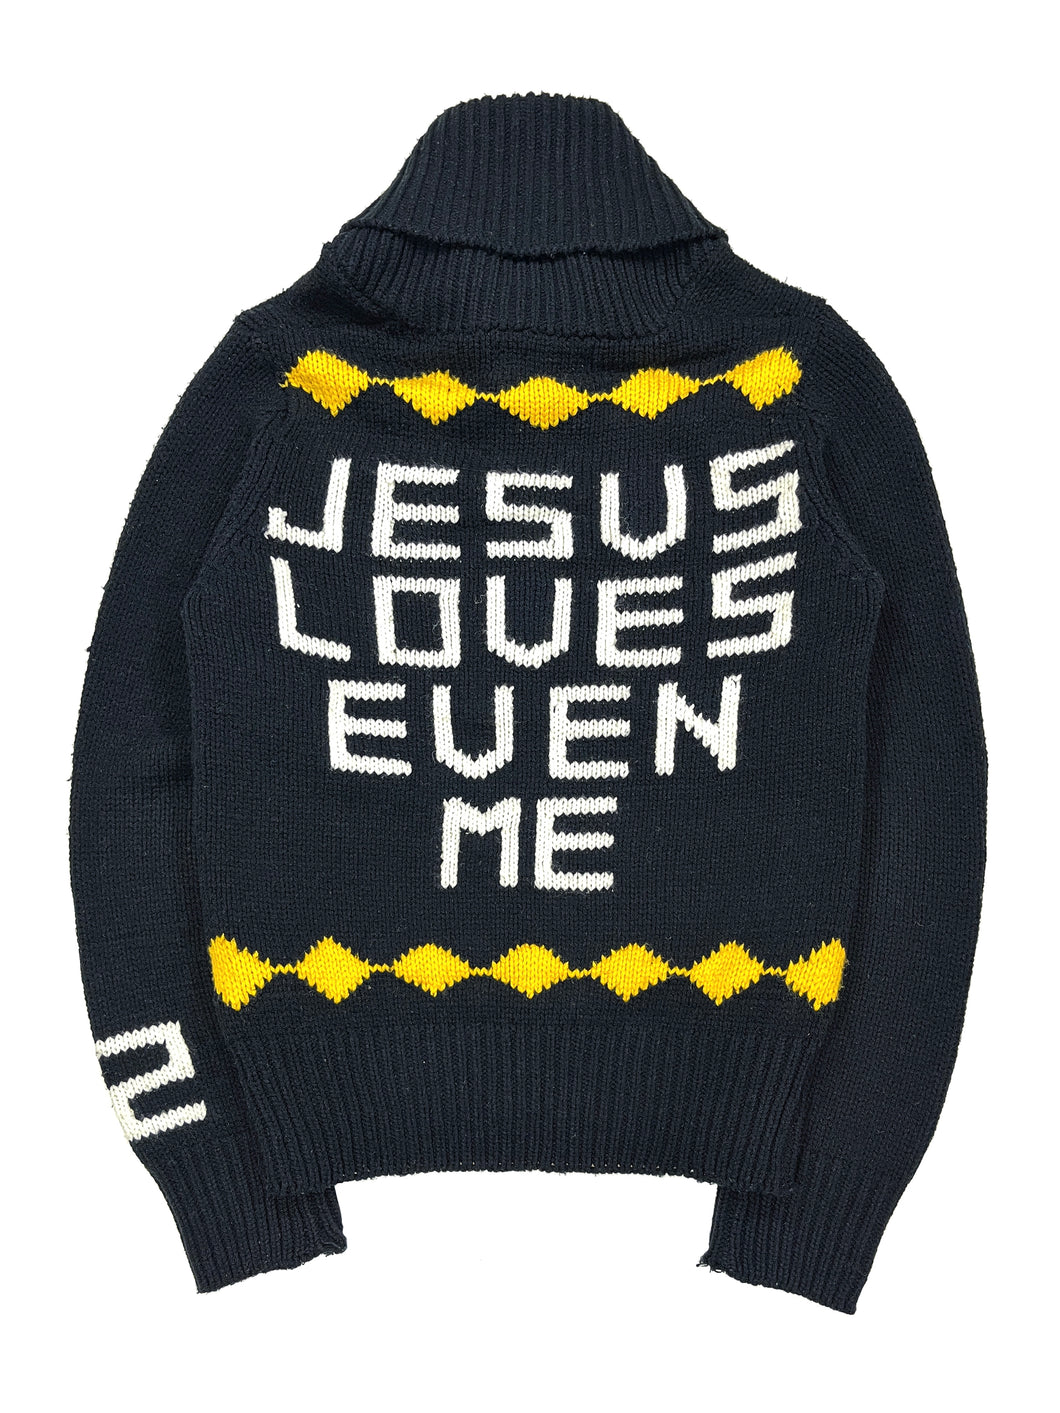 Dsquared2 “Jesus Loves Even Me” Sweater Knit Cowichan